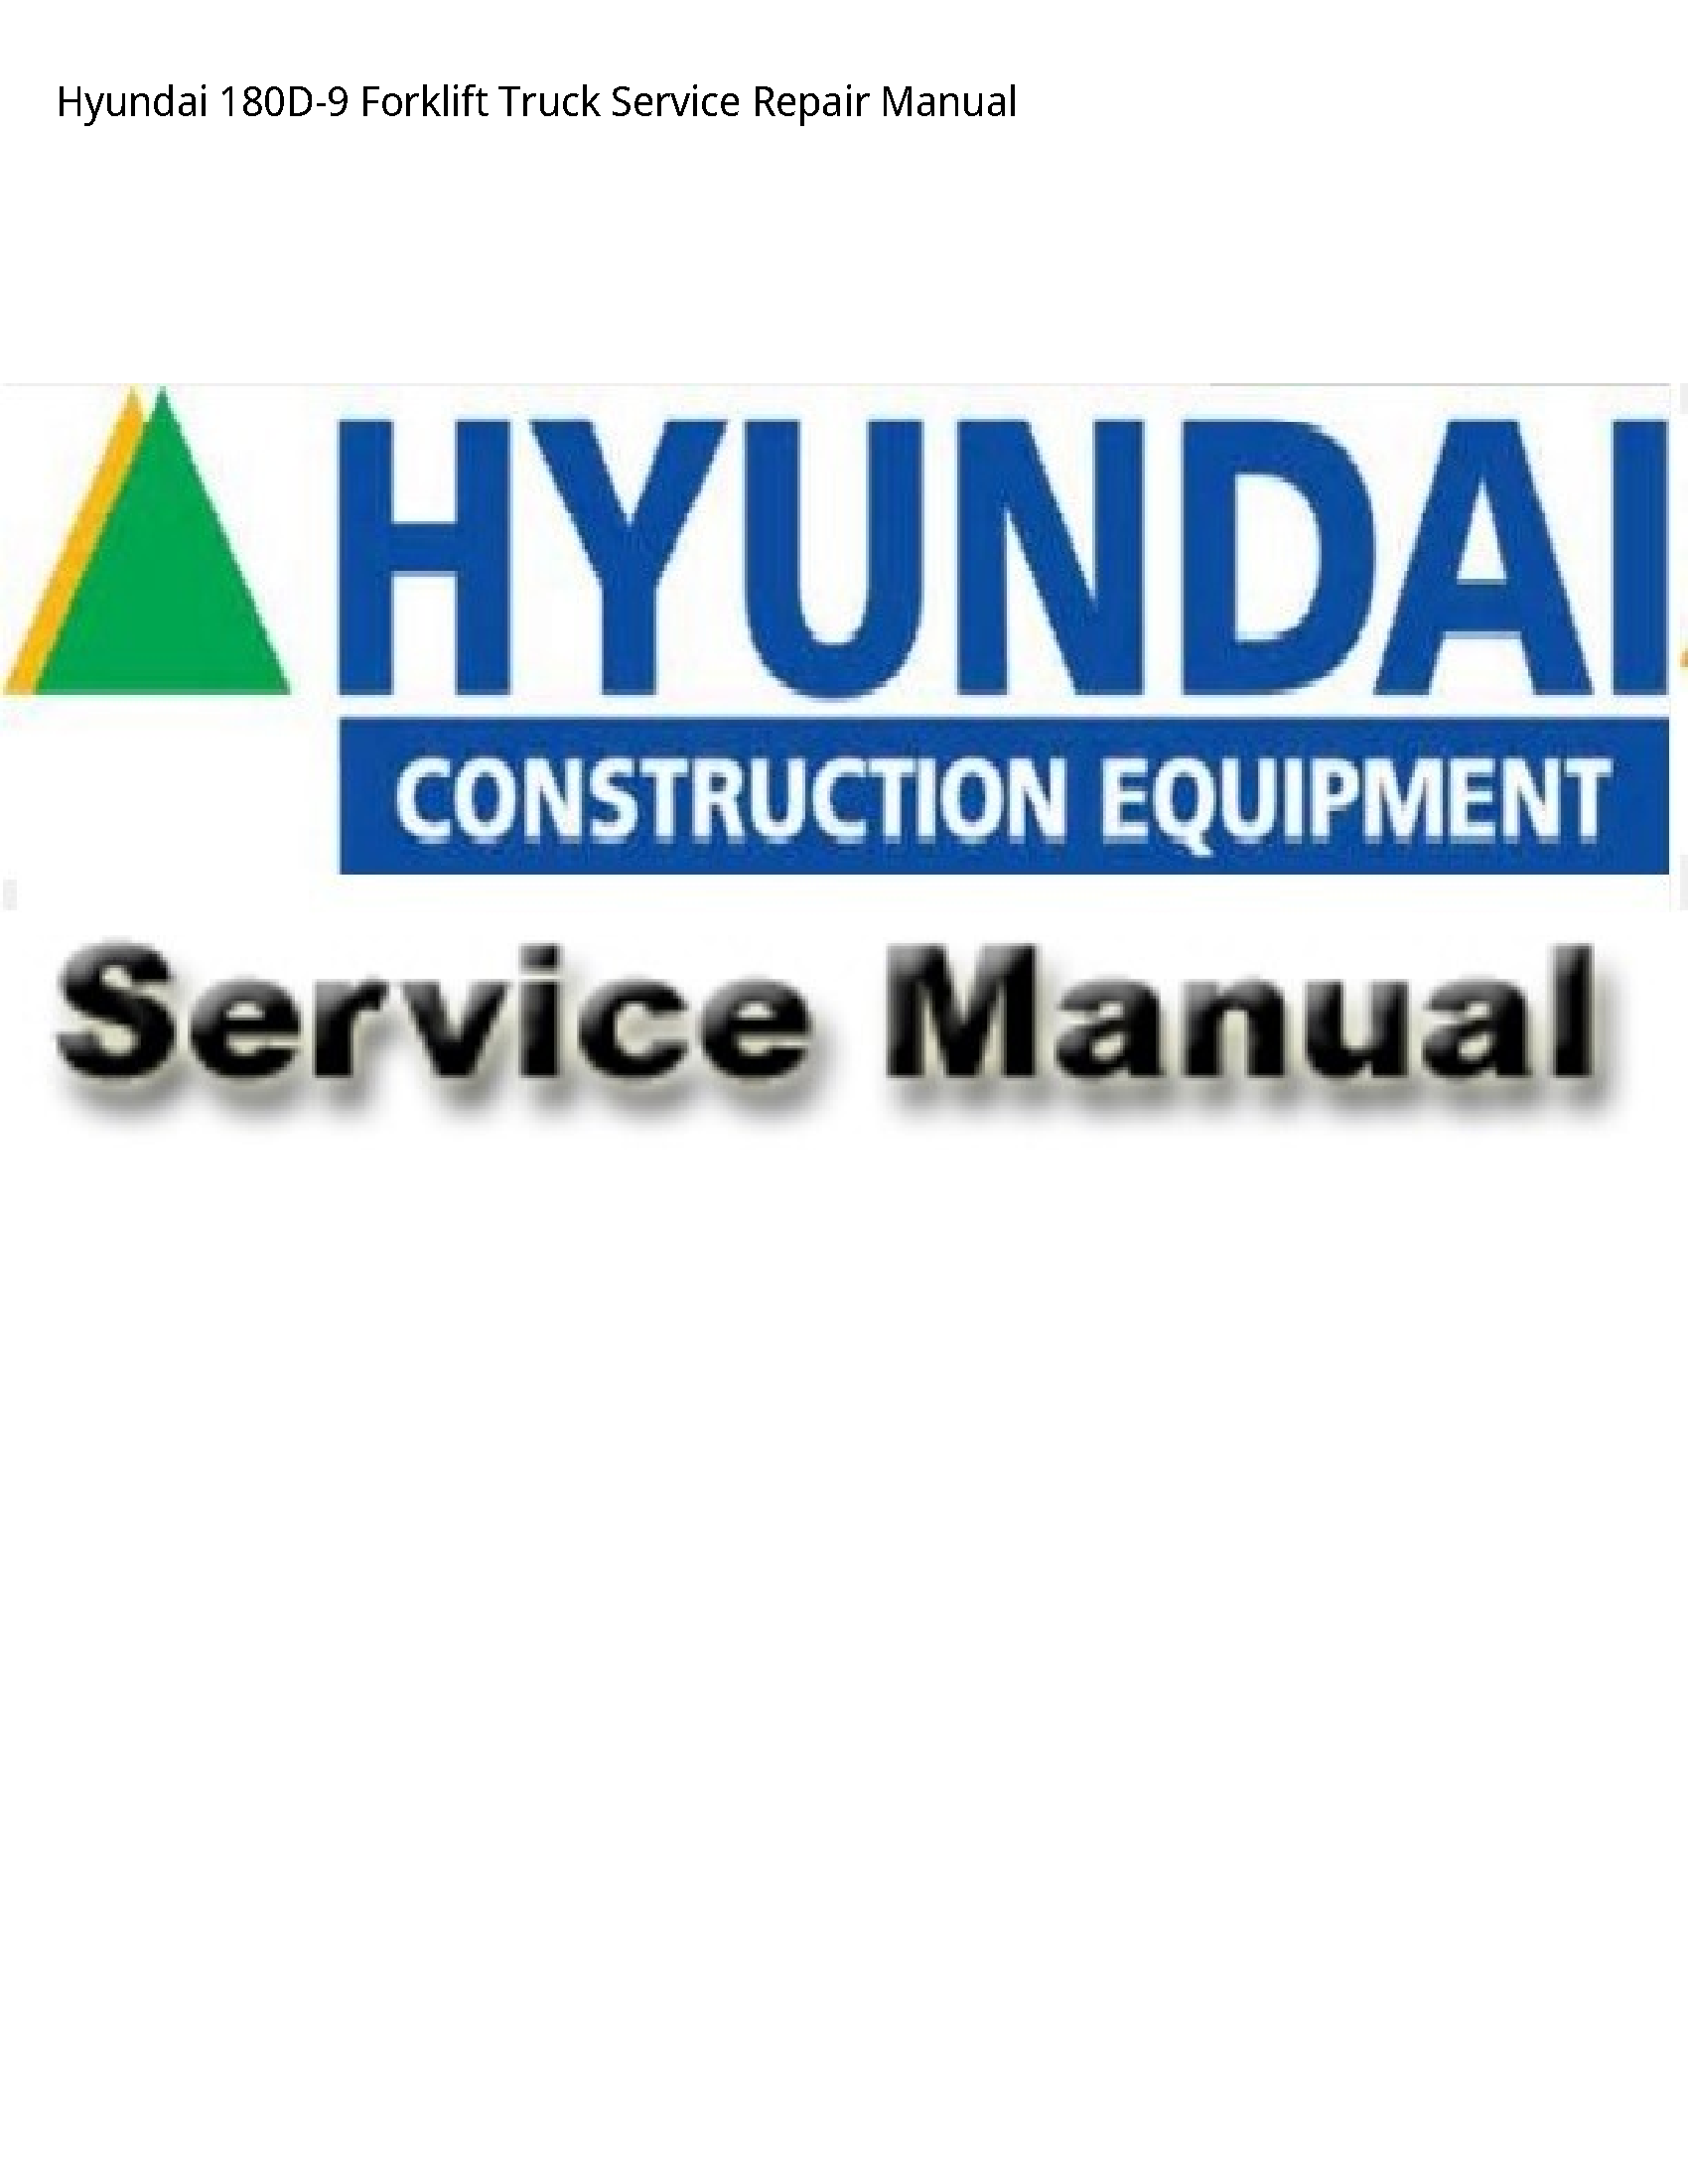 Hyundai 180D-9 Forklift Truck manual